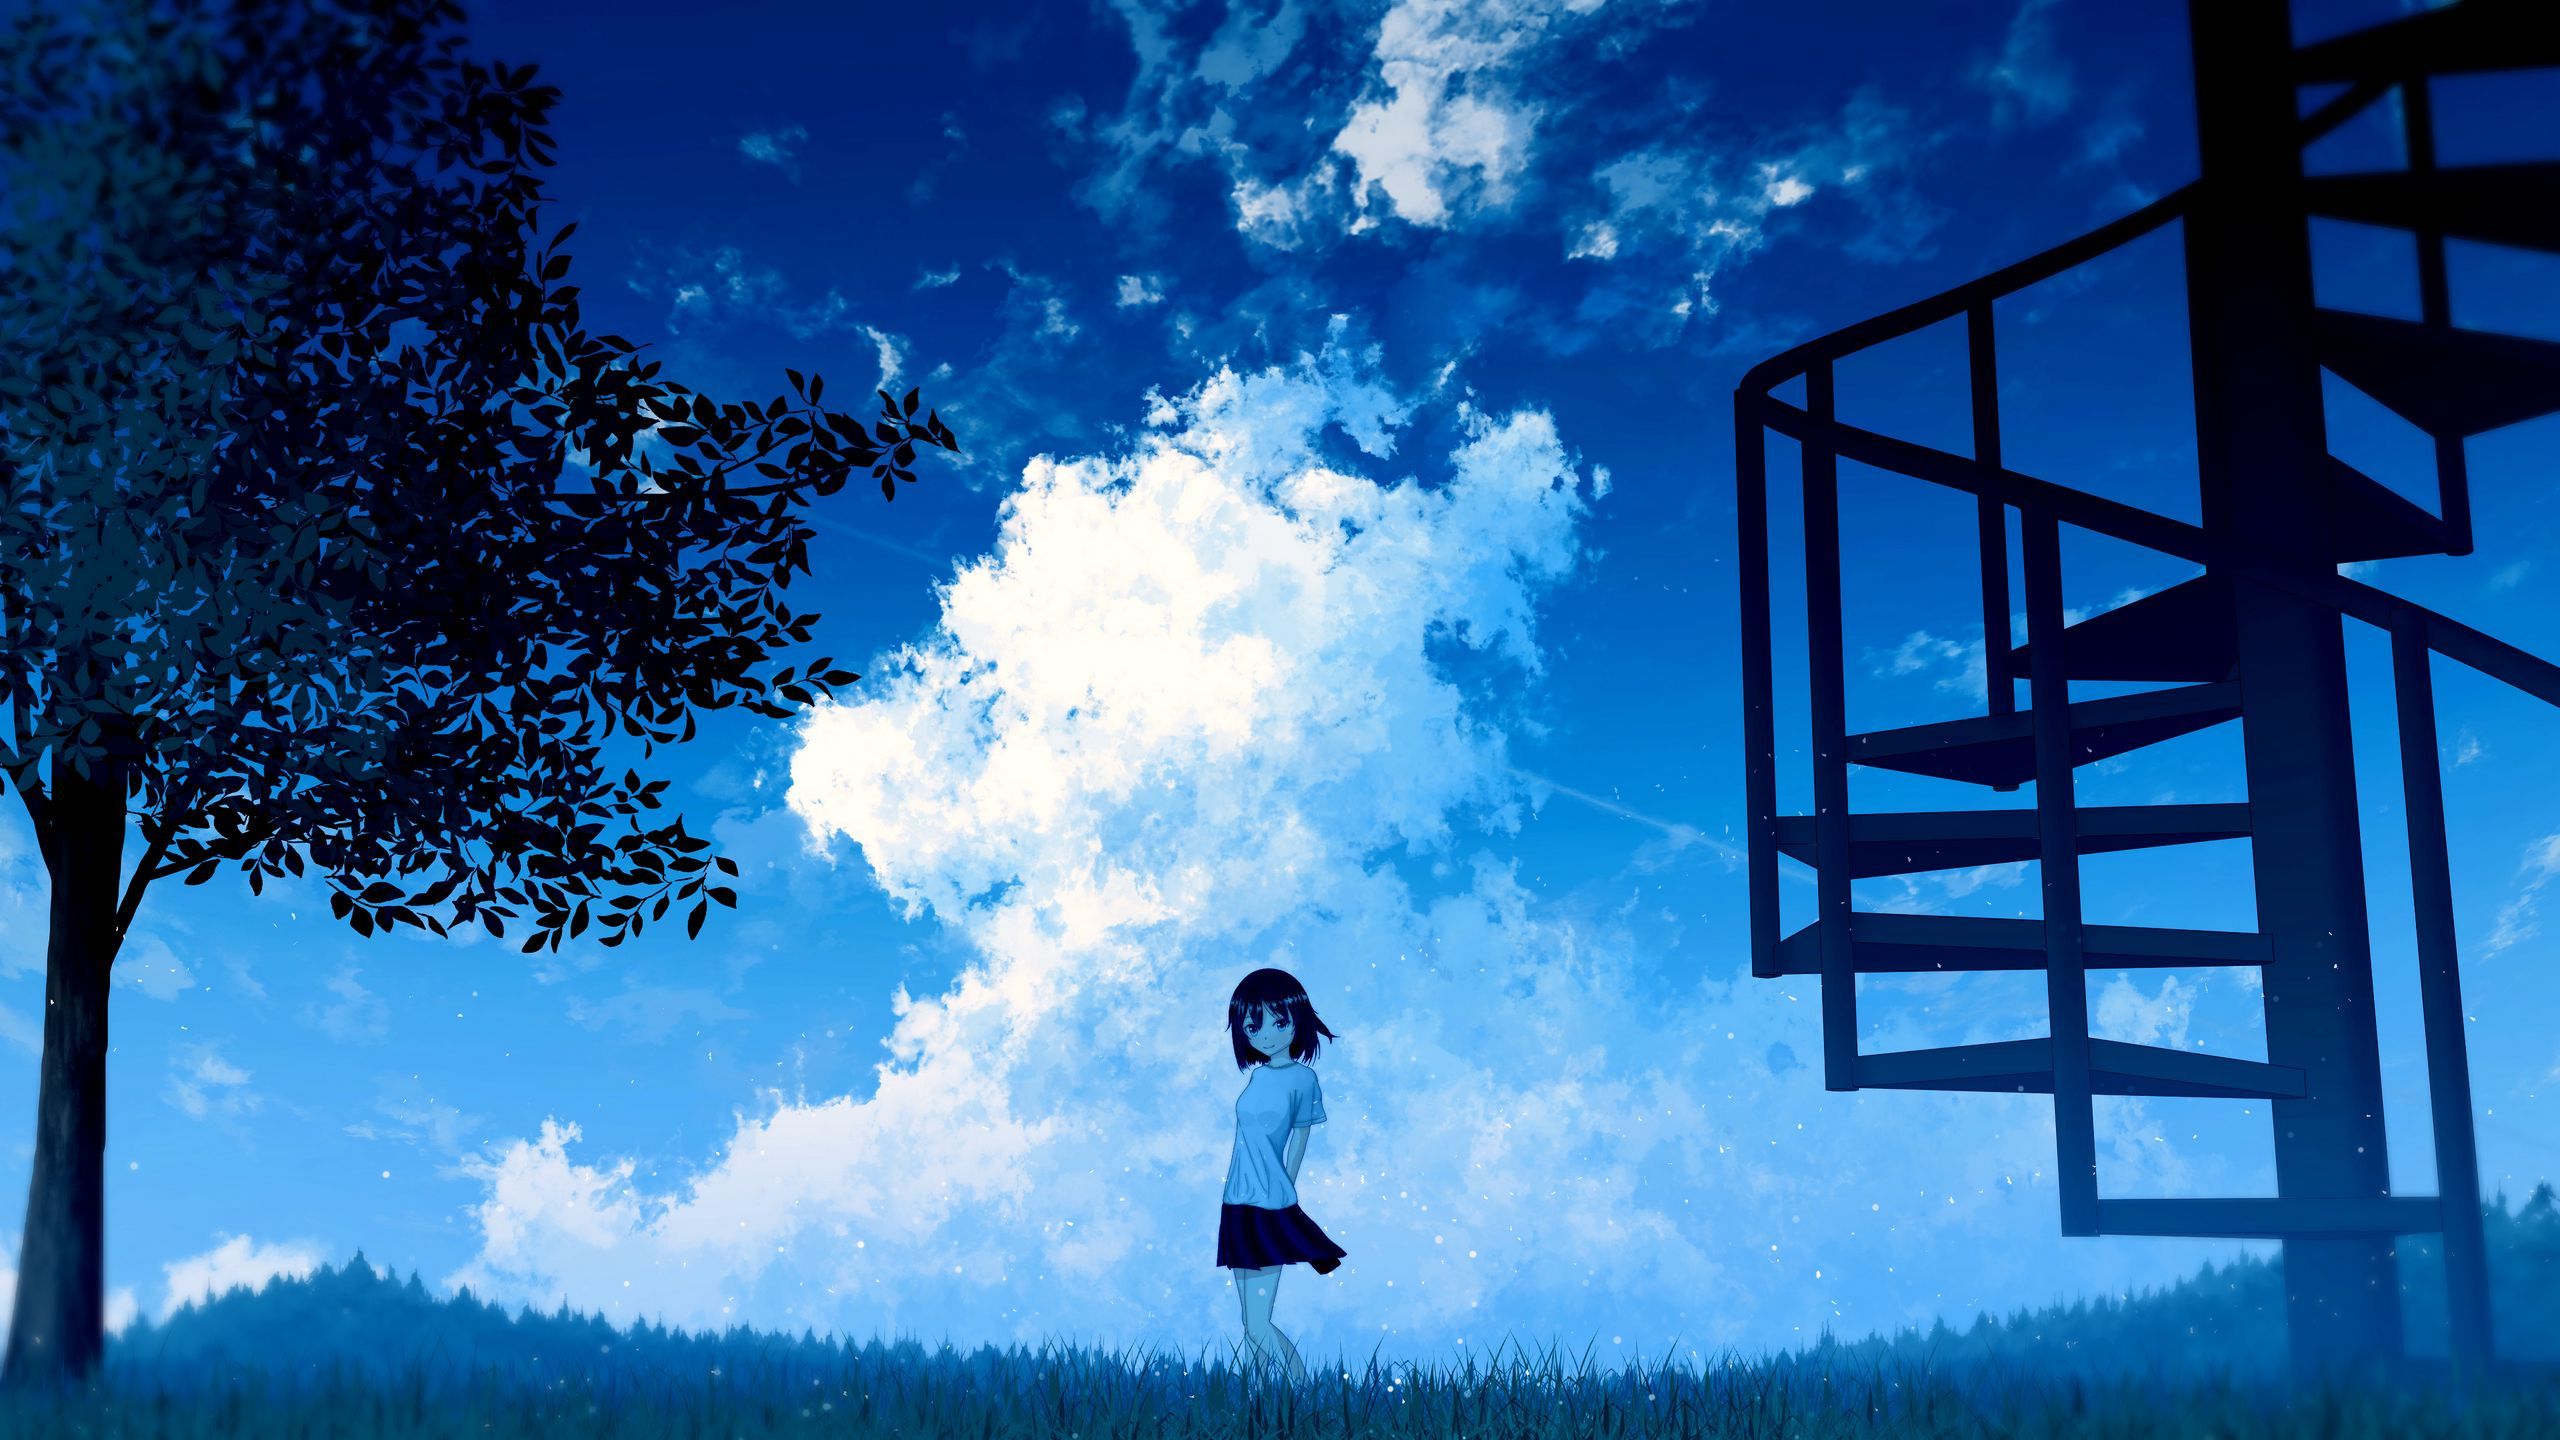 Download wallpaper 2560x1440 anime, girl, sky, clouds widescreen